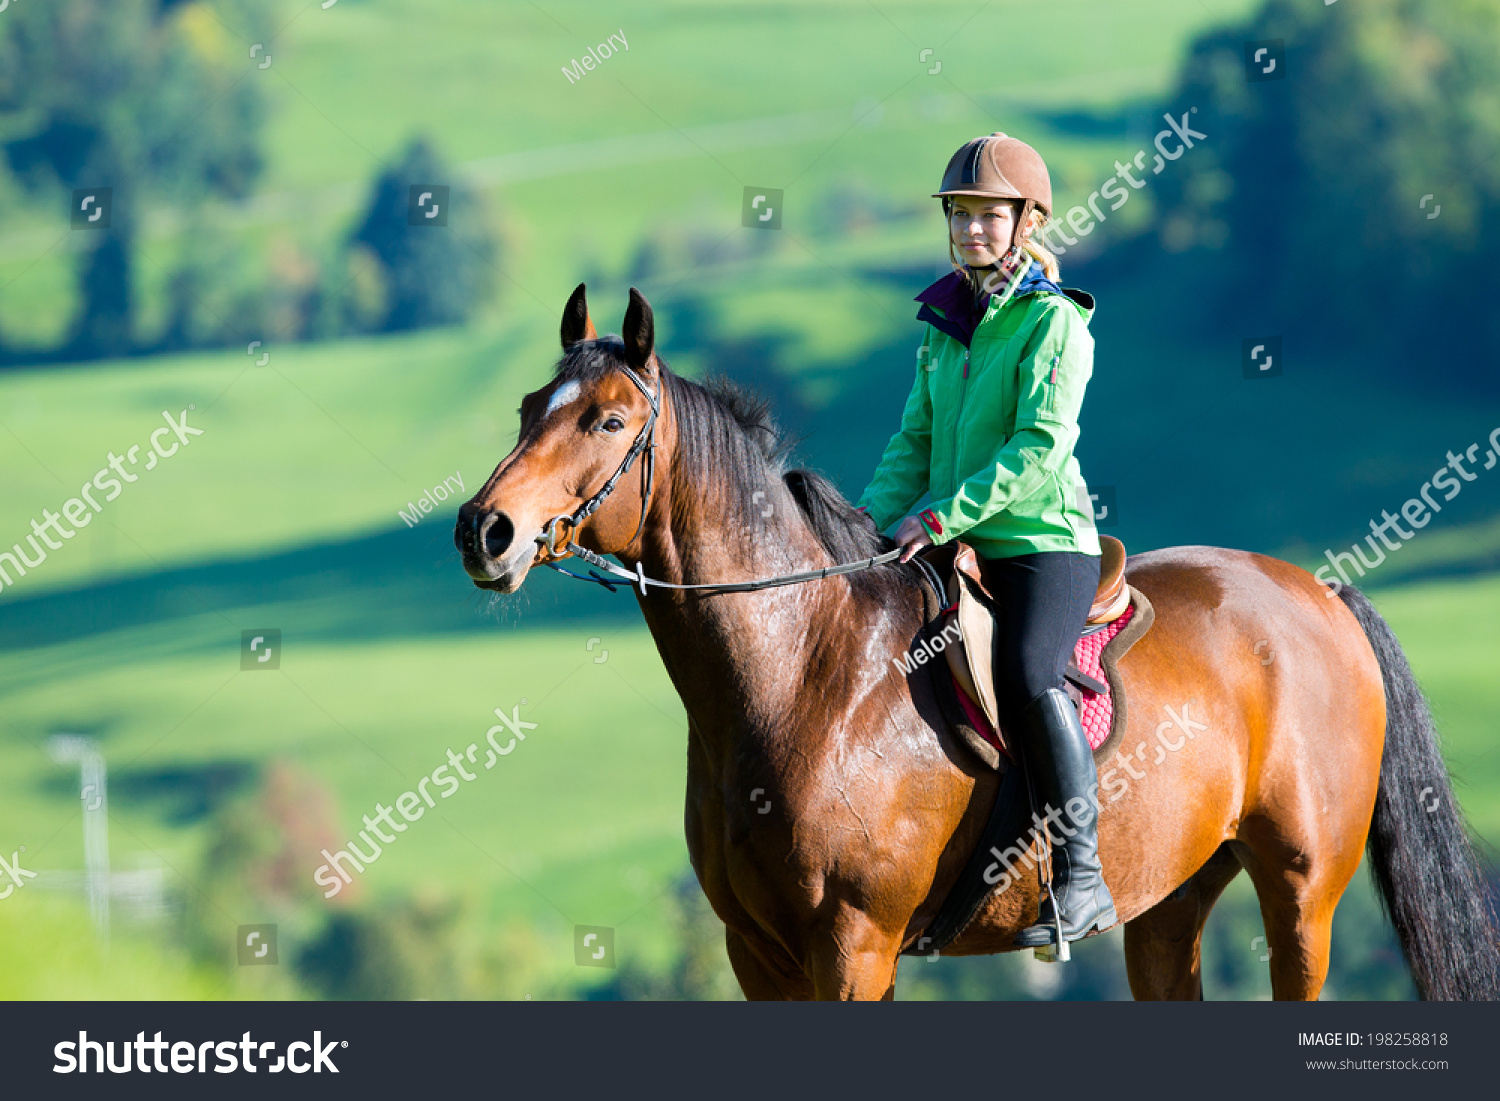 Woman riding a horse #198258818